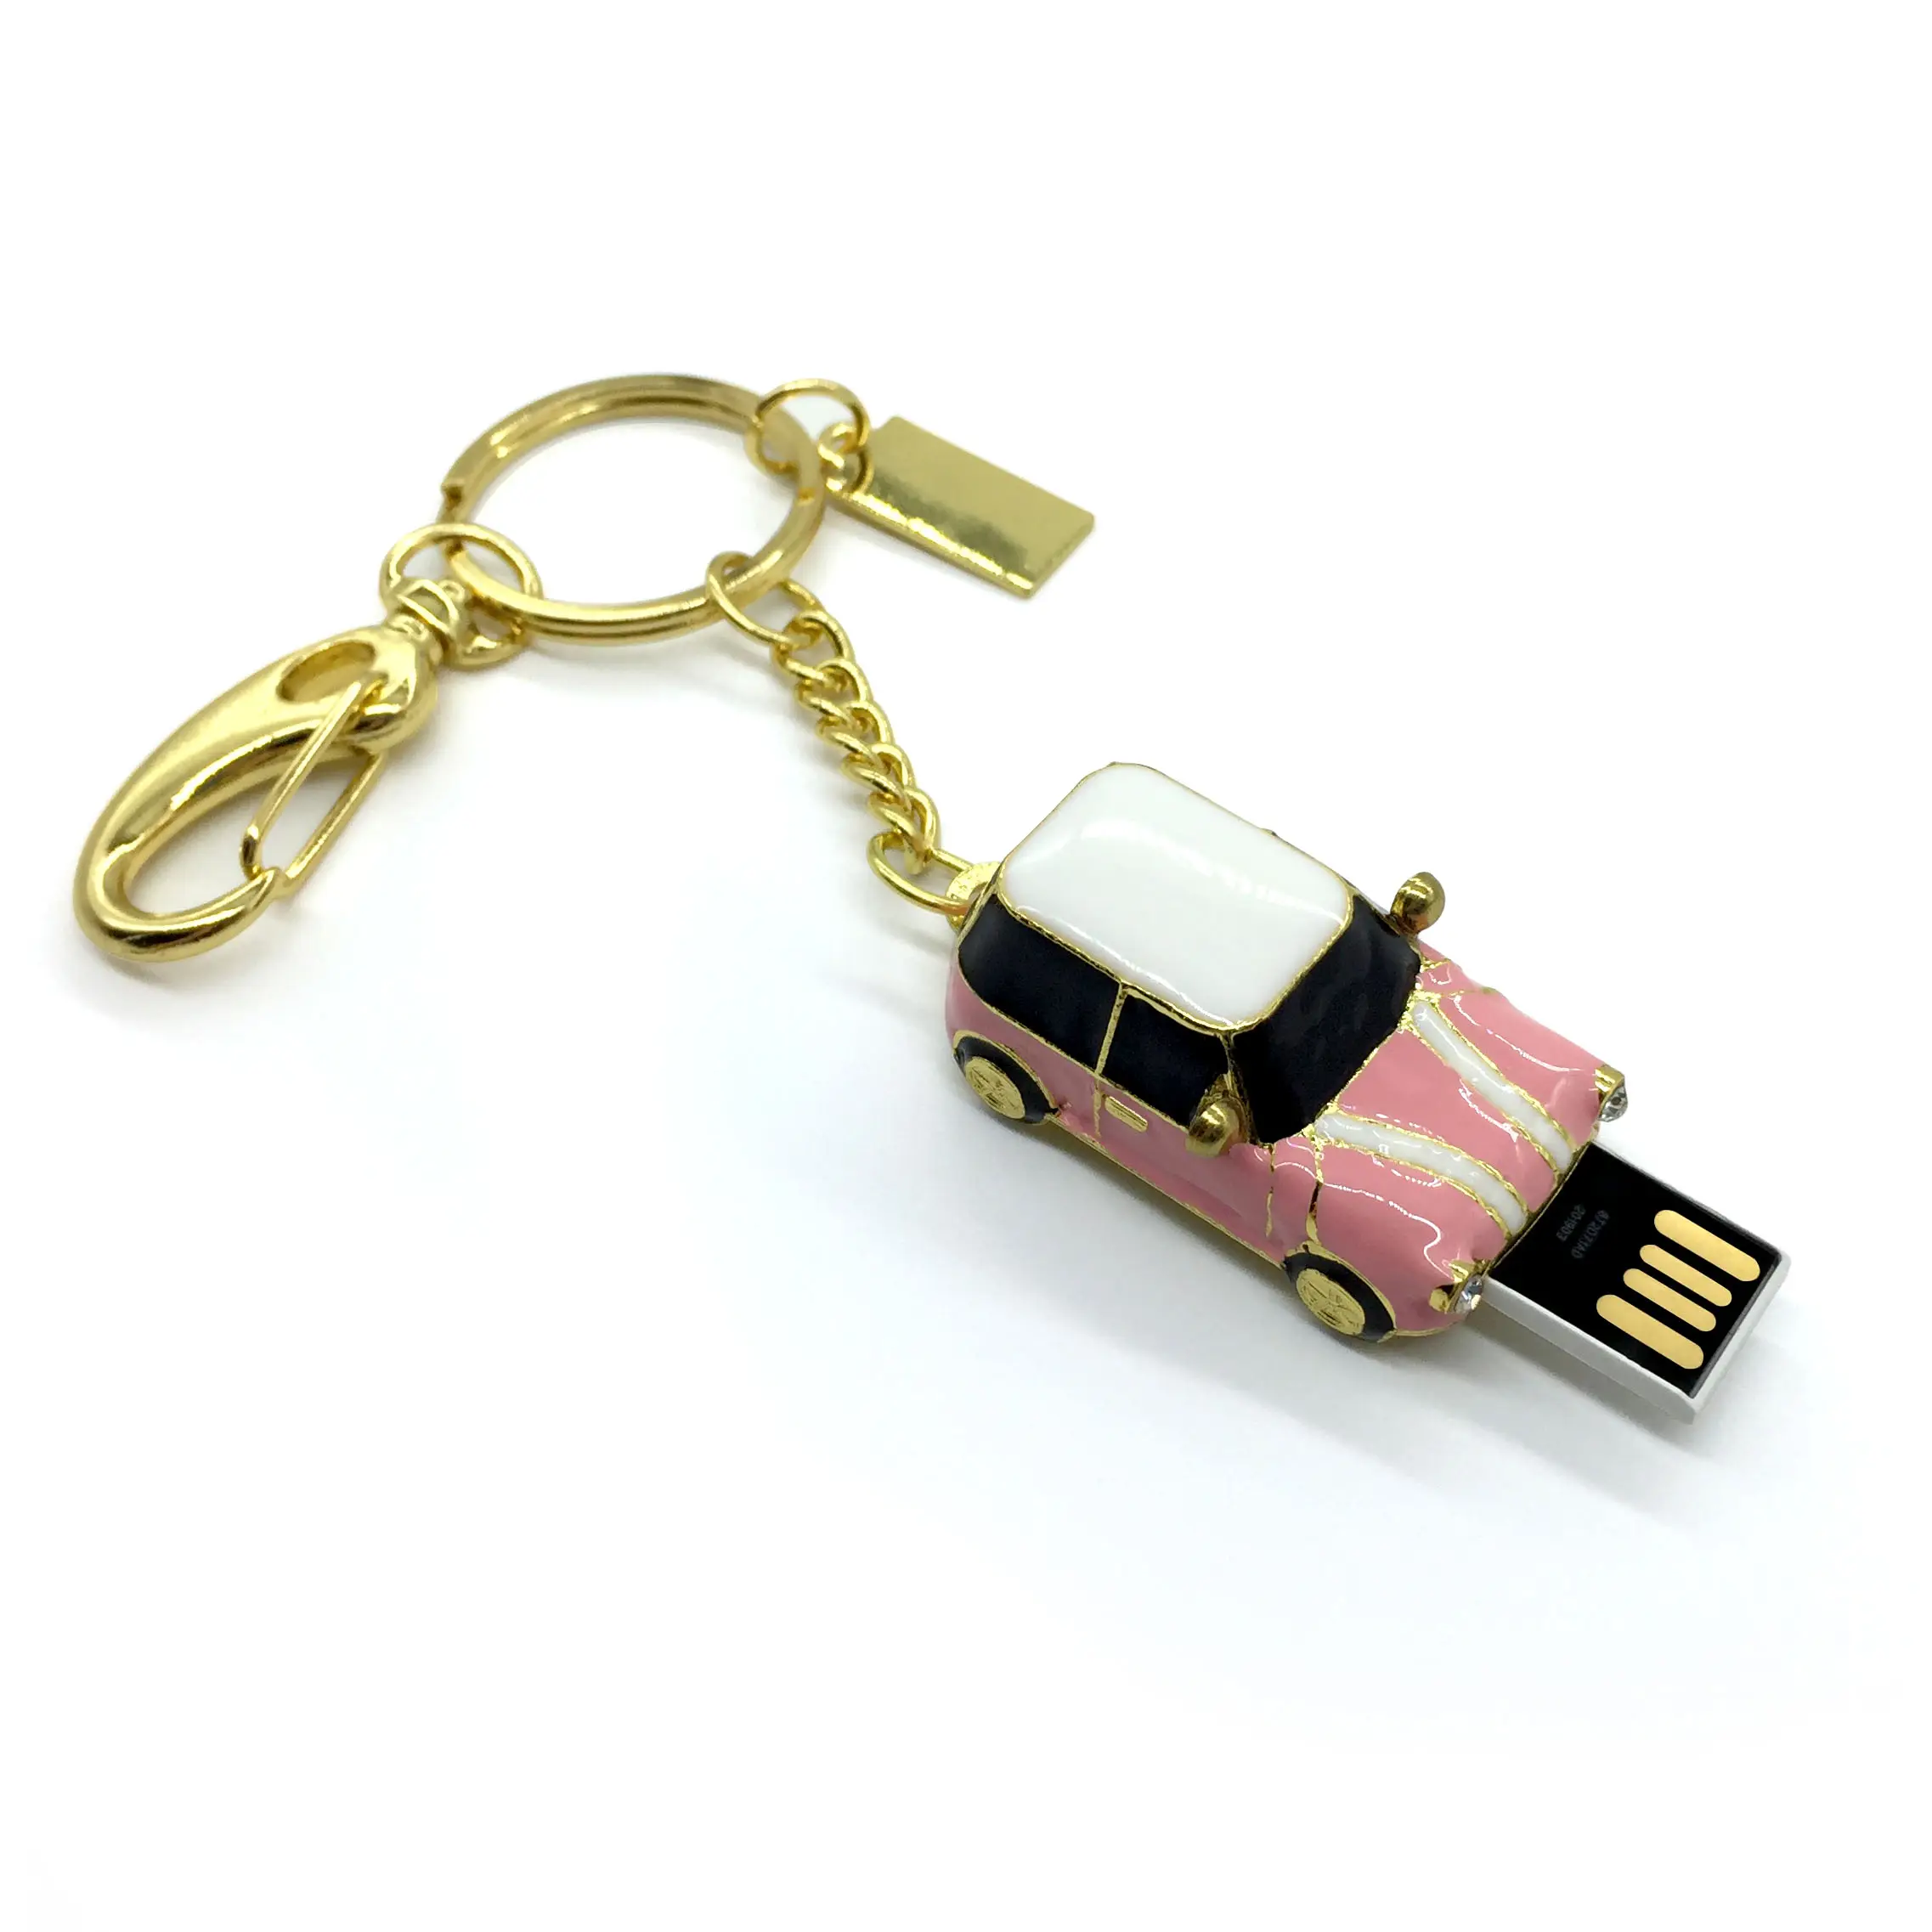 2019 Perhiasan Mobil Enamel 3D 2.0 Flash Drive USB Cooper Mini Perhiasan Lapisan Emas Logam Campuran Seng untuk Hadiah Promosi